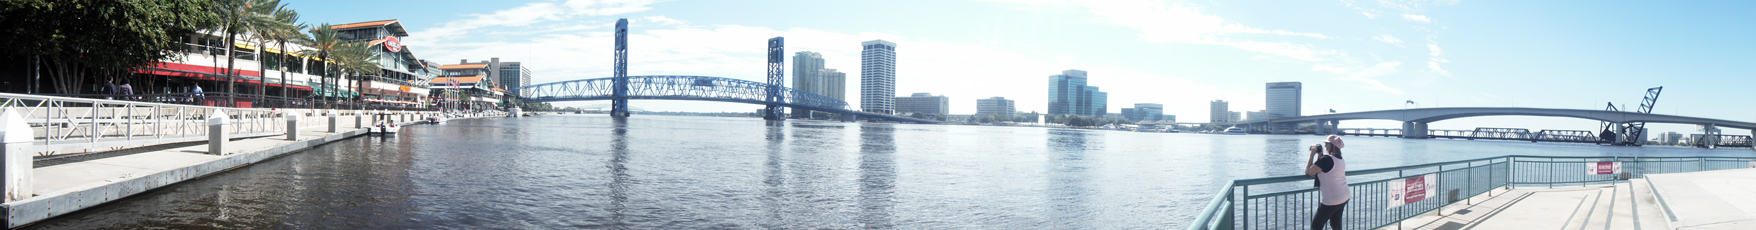 panorama of The Jacksonville Landing 